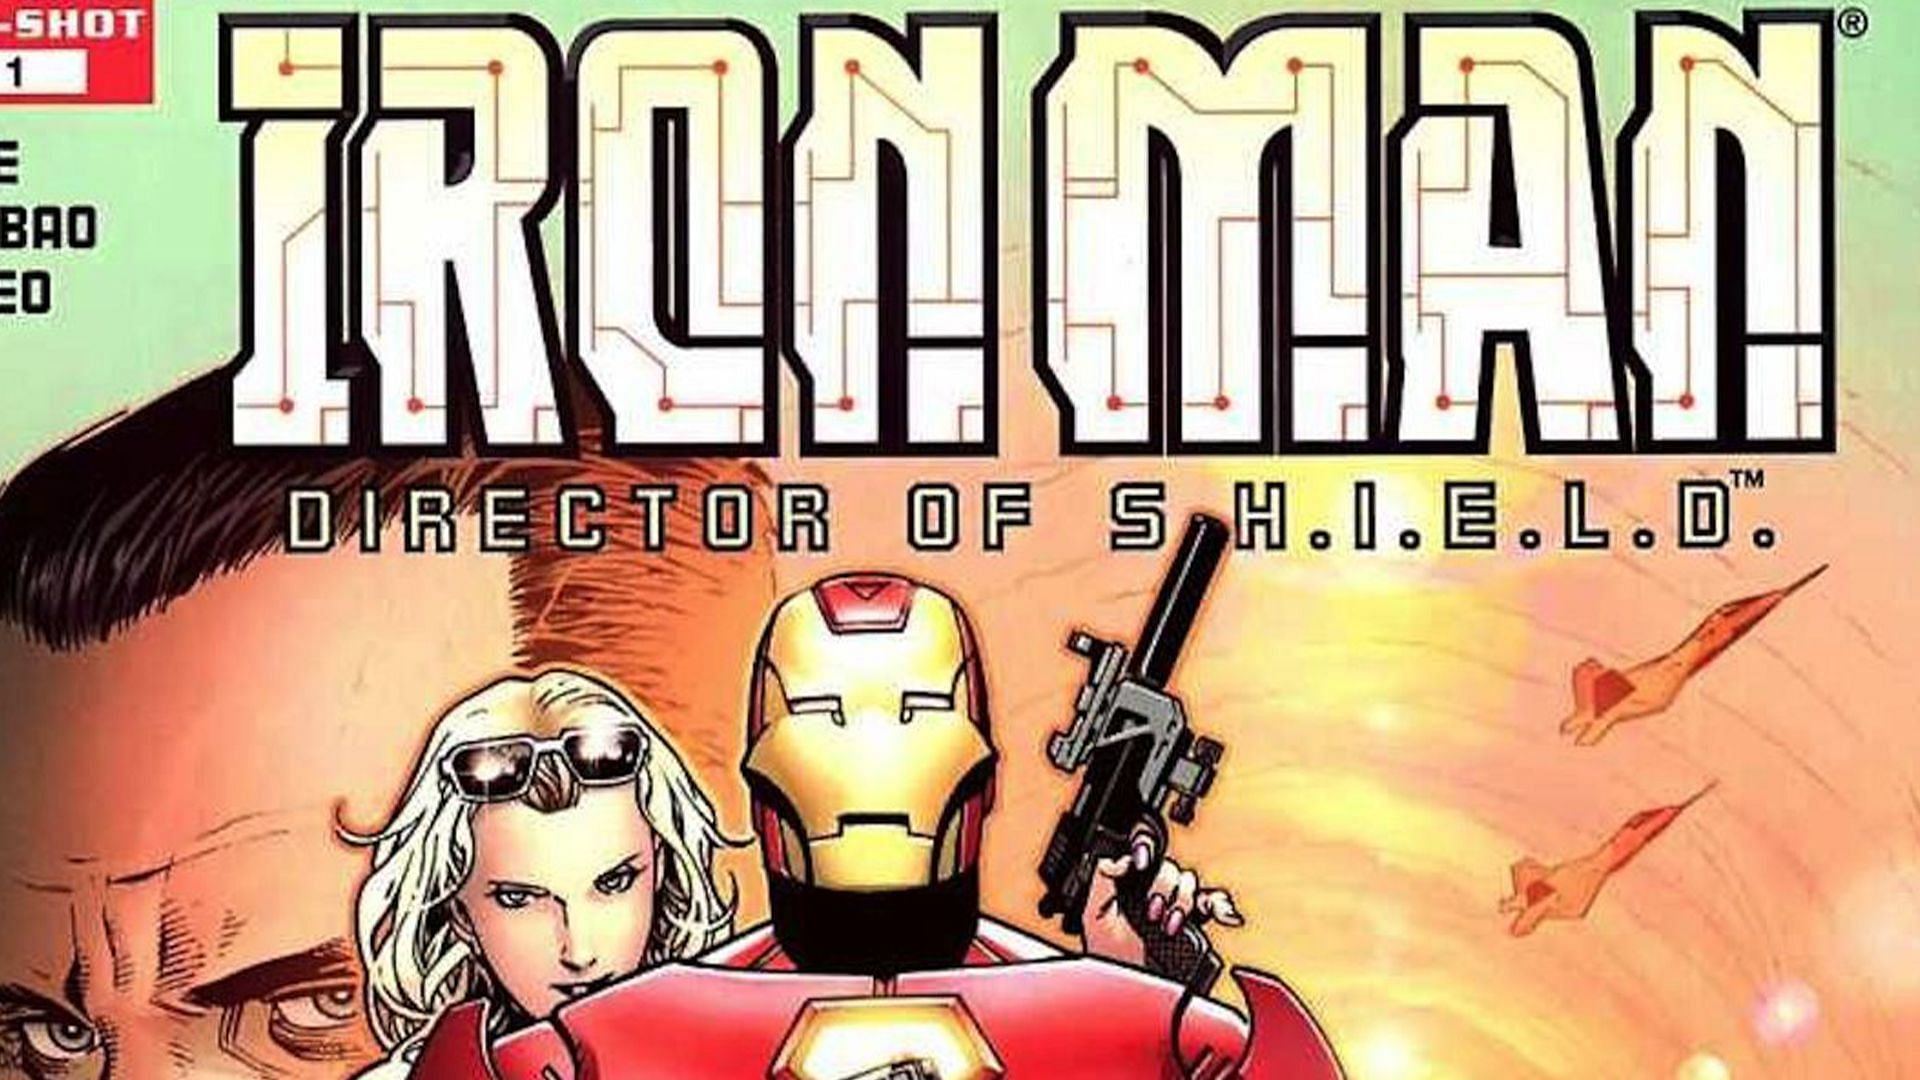 Iron Man: Director of S.H.I.E.L.D (Image via Marvel)